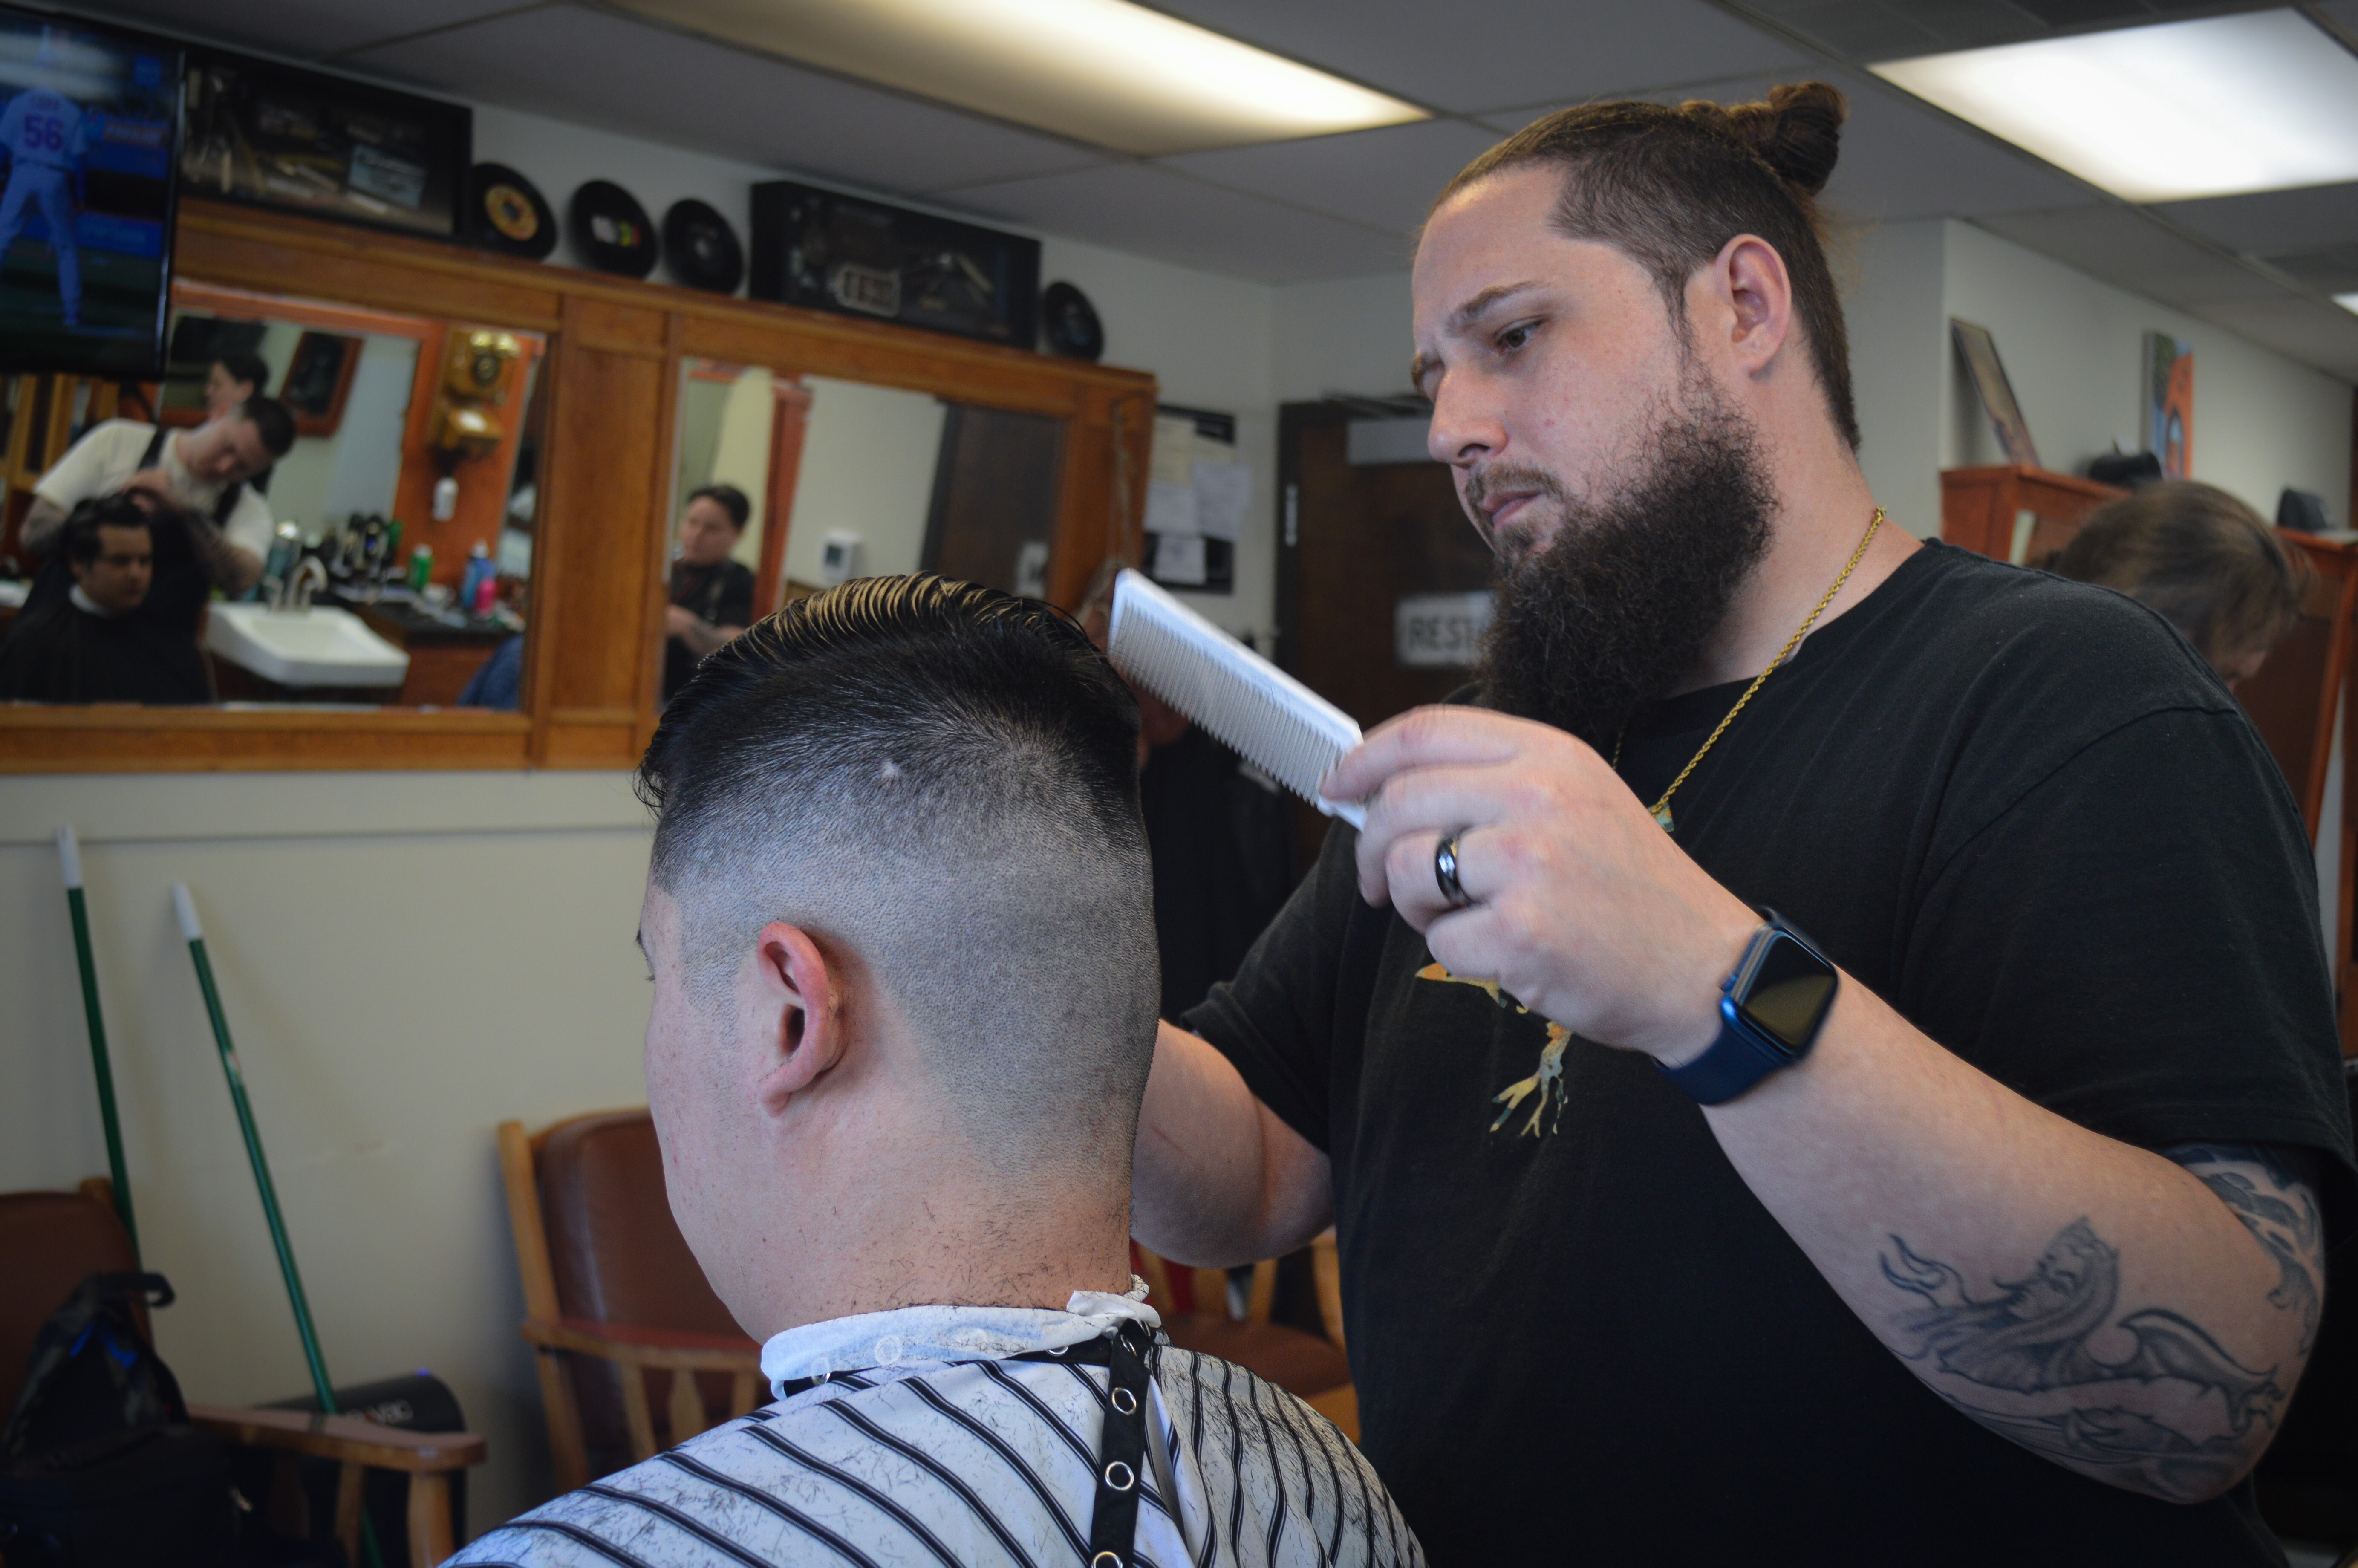 Skinfade# Tigard Barbershop #Portland Barbershop #PDX barbershop # fade#high and tight fade#clean haircut#designer#Art#barber art# fashion #old school barbershop#shave#edge#Antique Barbershop